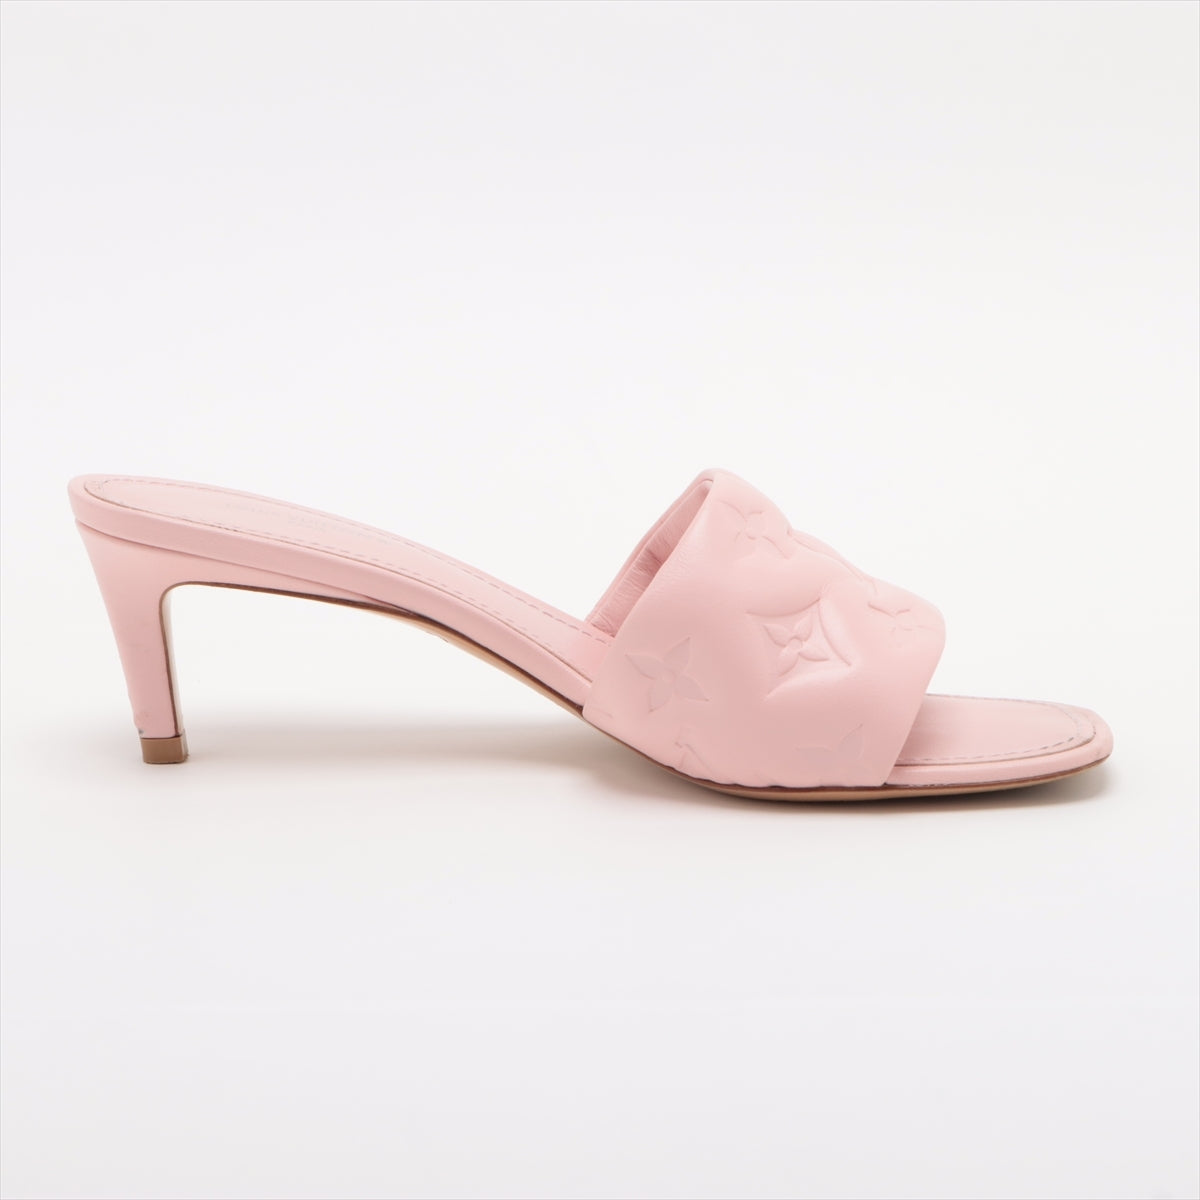 Louis Vuitton revival line 21 years Leather Sandals 36 1/2 Ladies' Pink SW0291 Monogram embossed